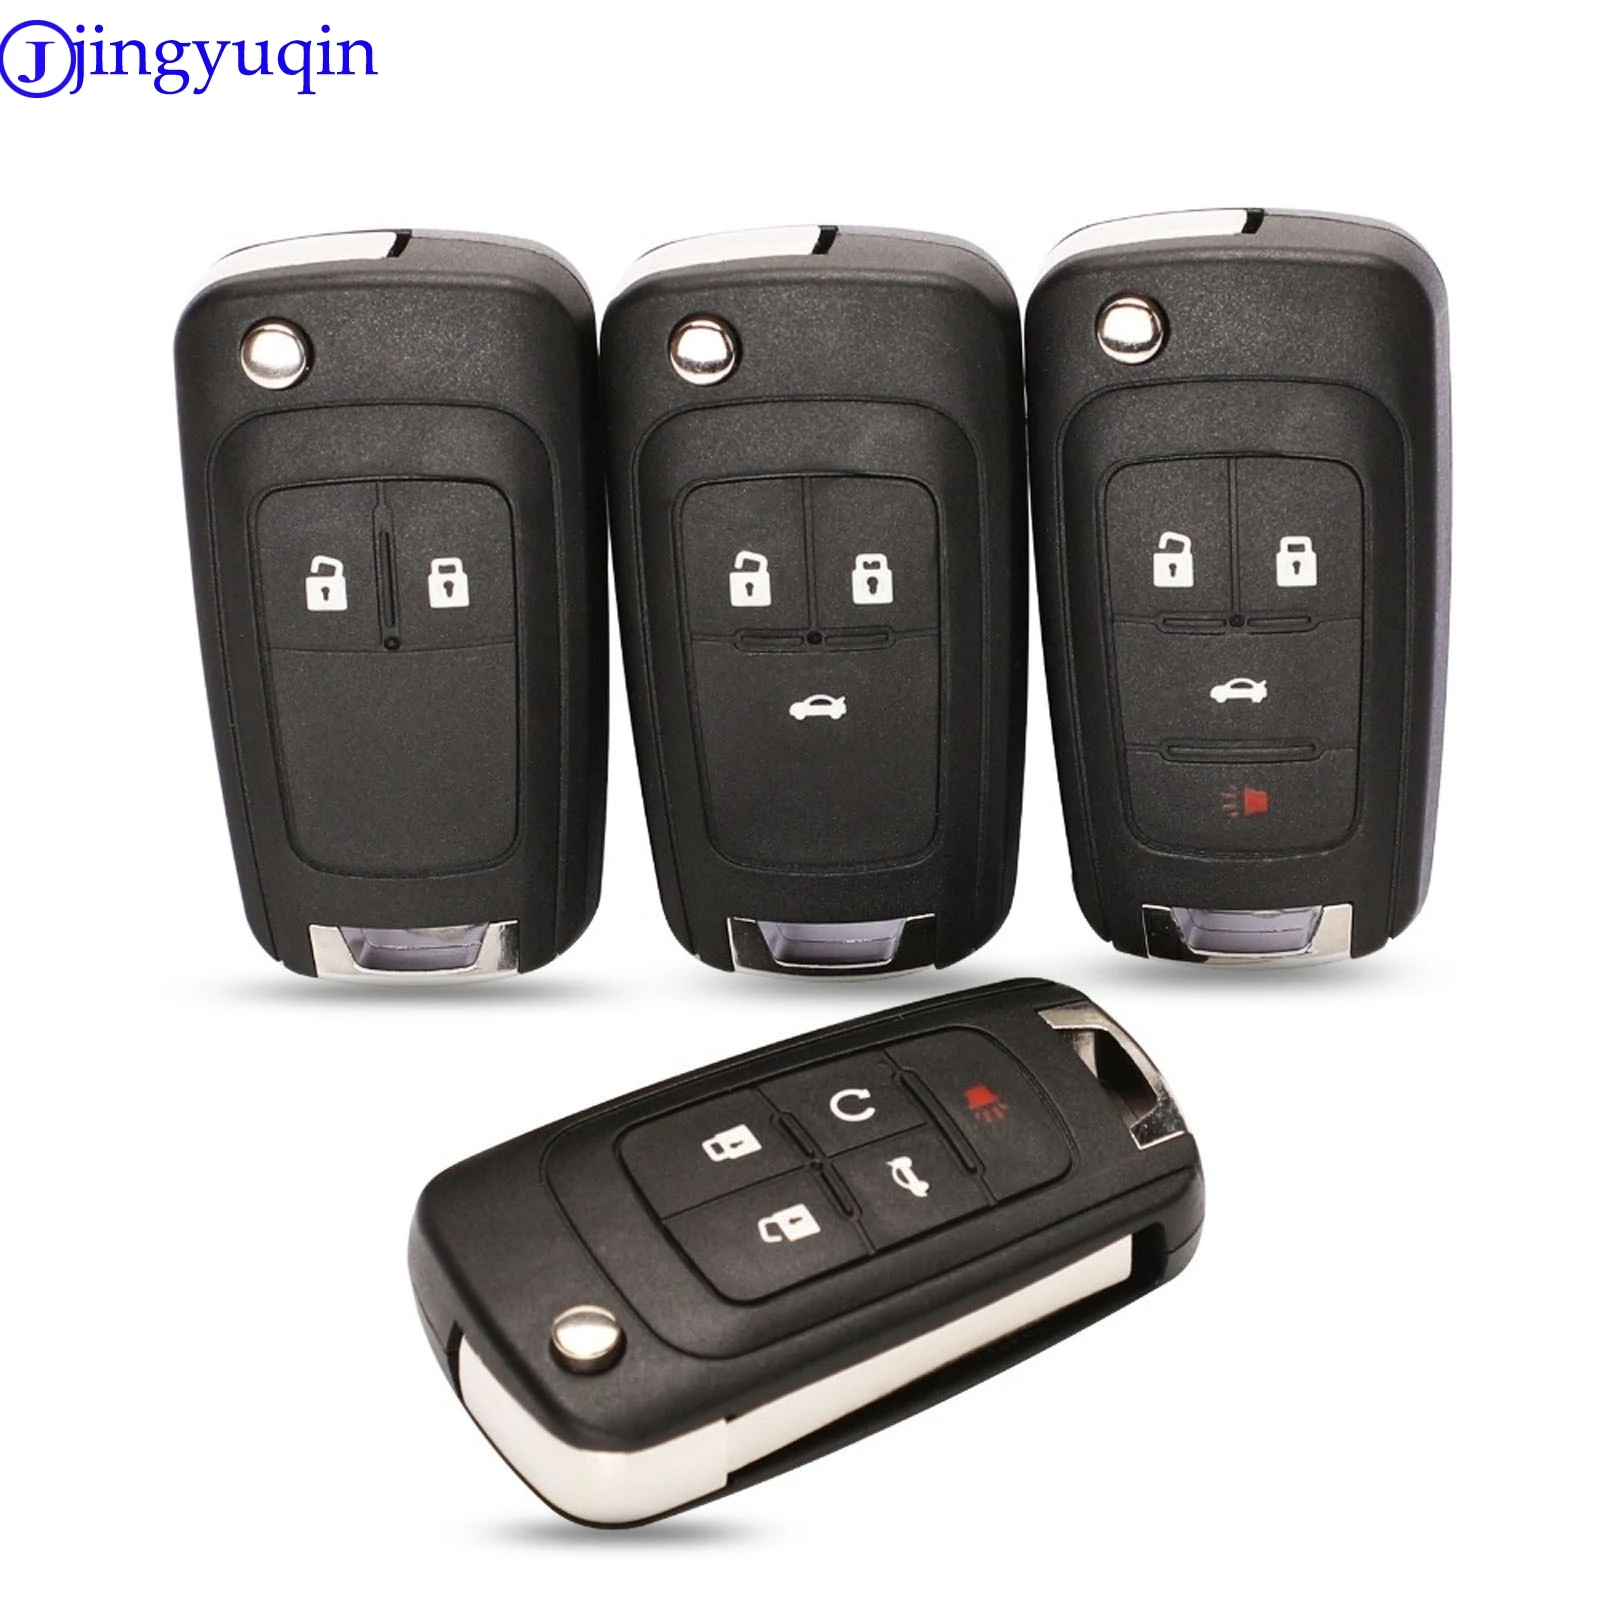 jingyuqin Flip Folding Remote car Key Shell For Chevrolet Cruze Epica Lova Camaro Impala 2 3 4 5 Button HU100 Blade